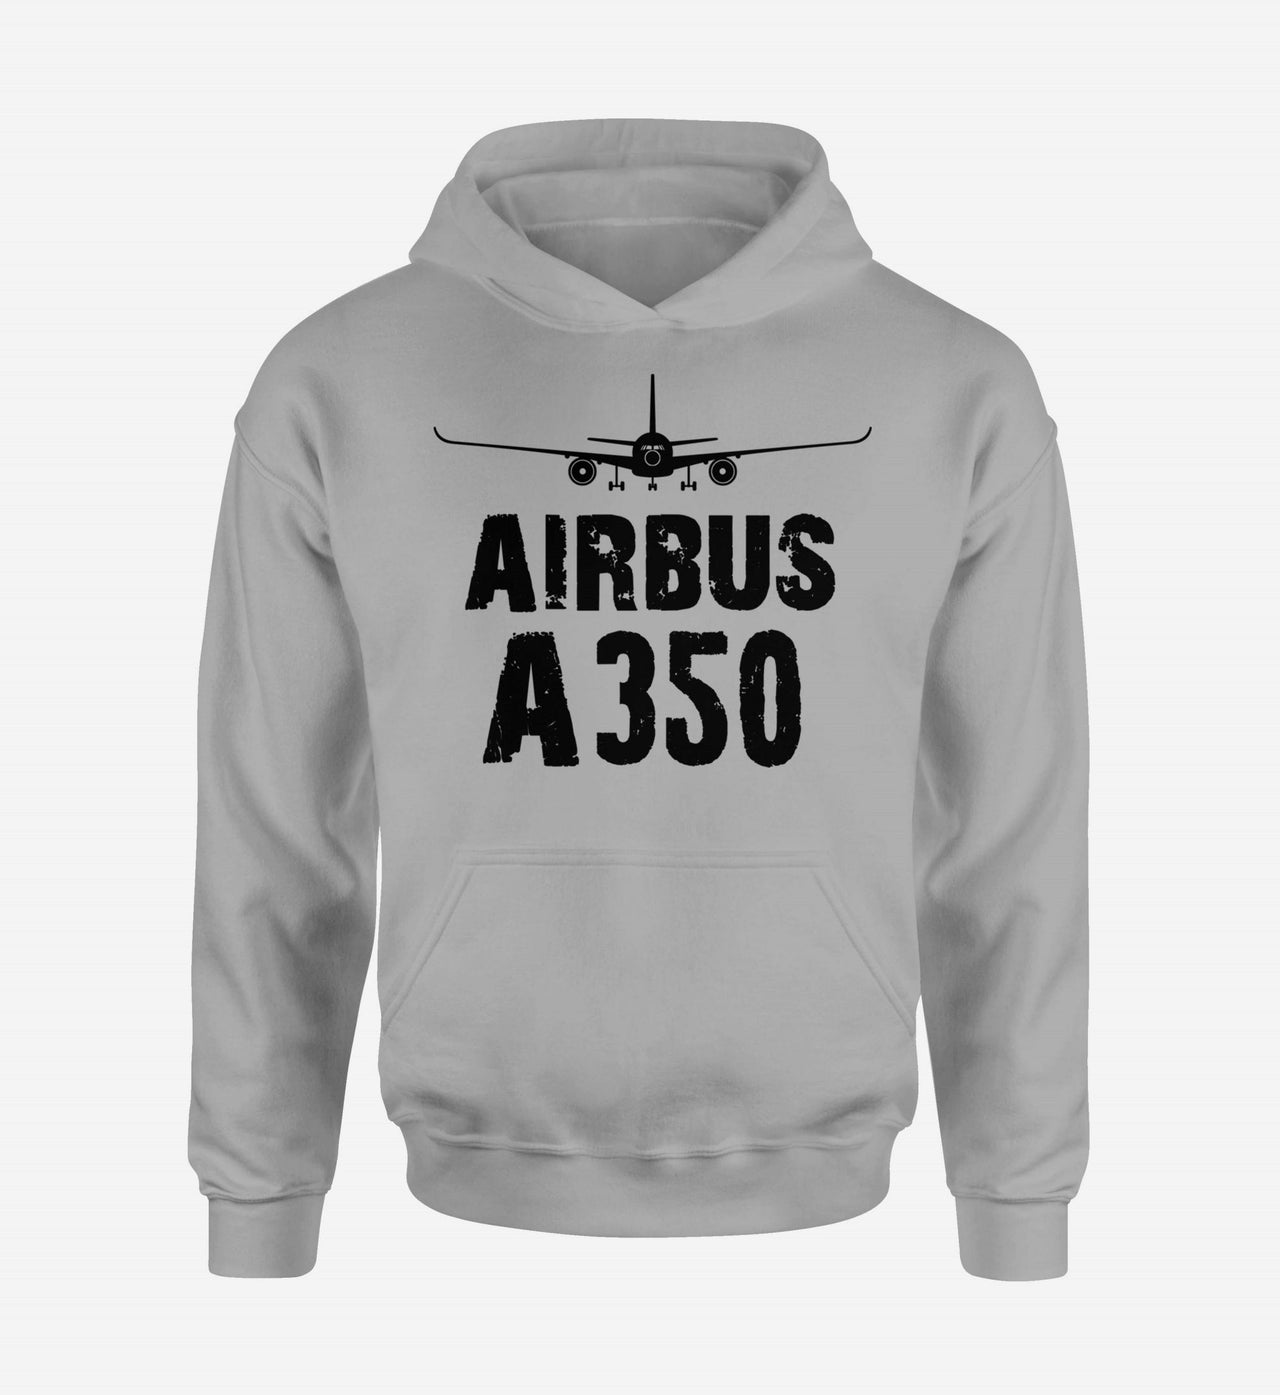 Airbus A350 & Plane Designed Hoodies